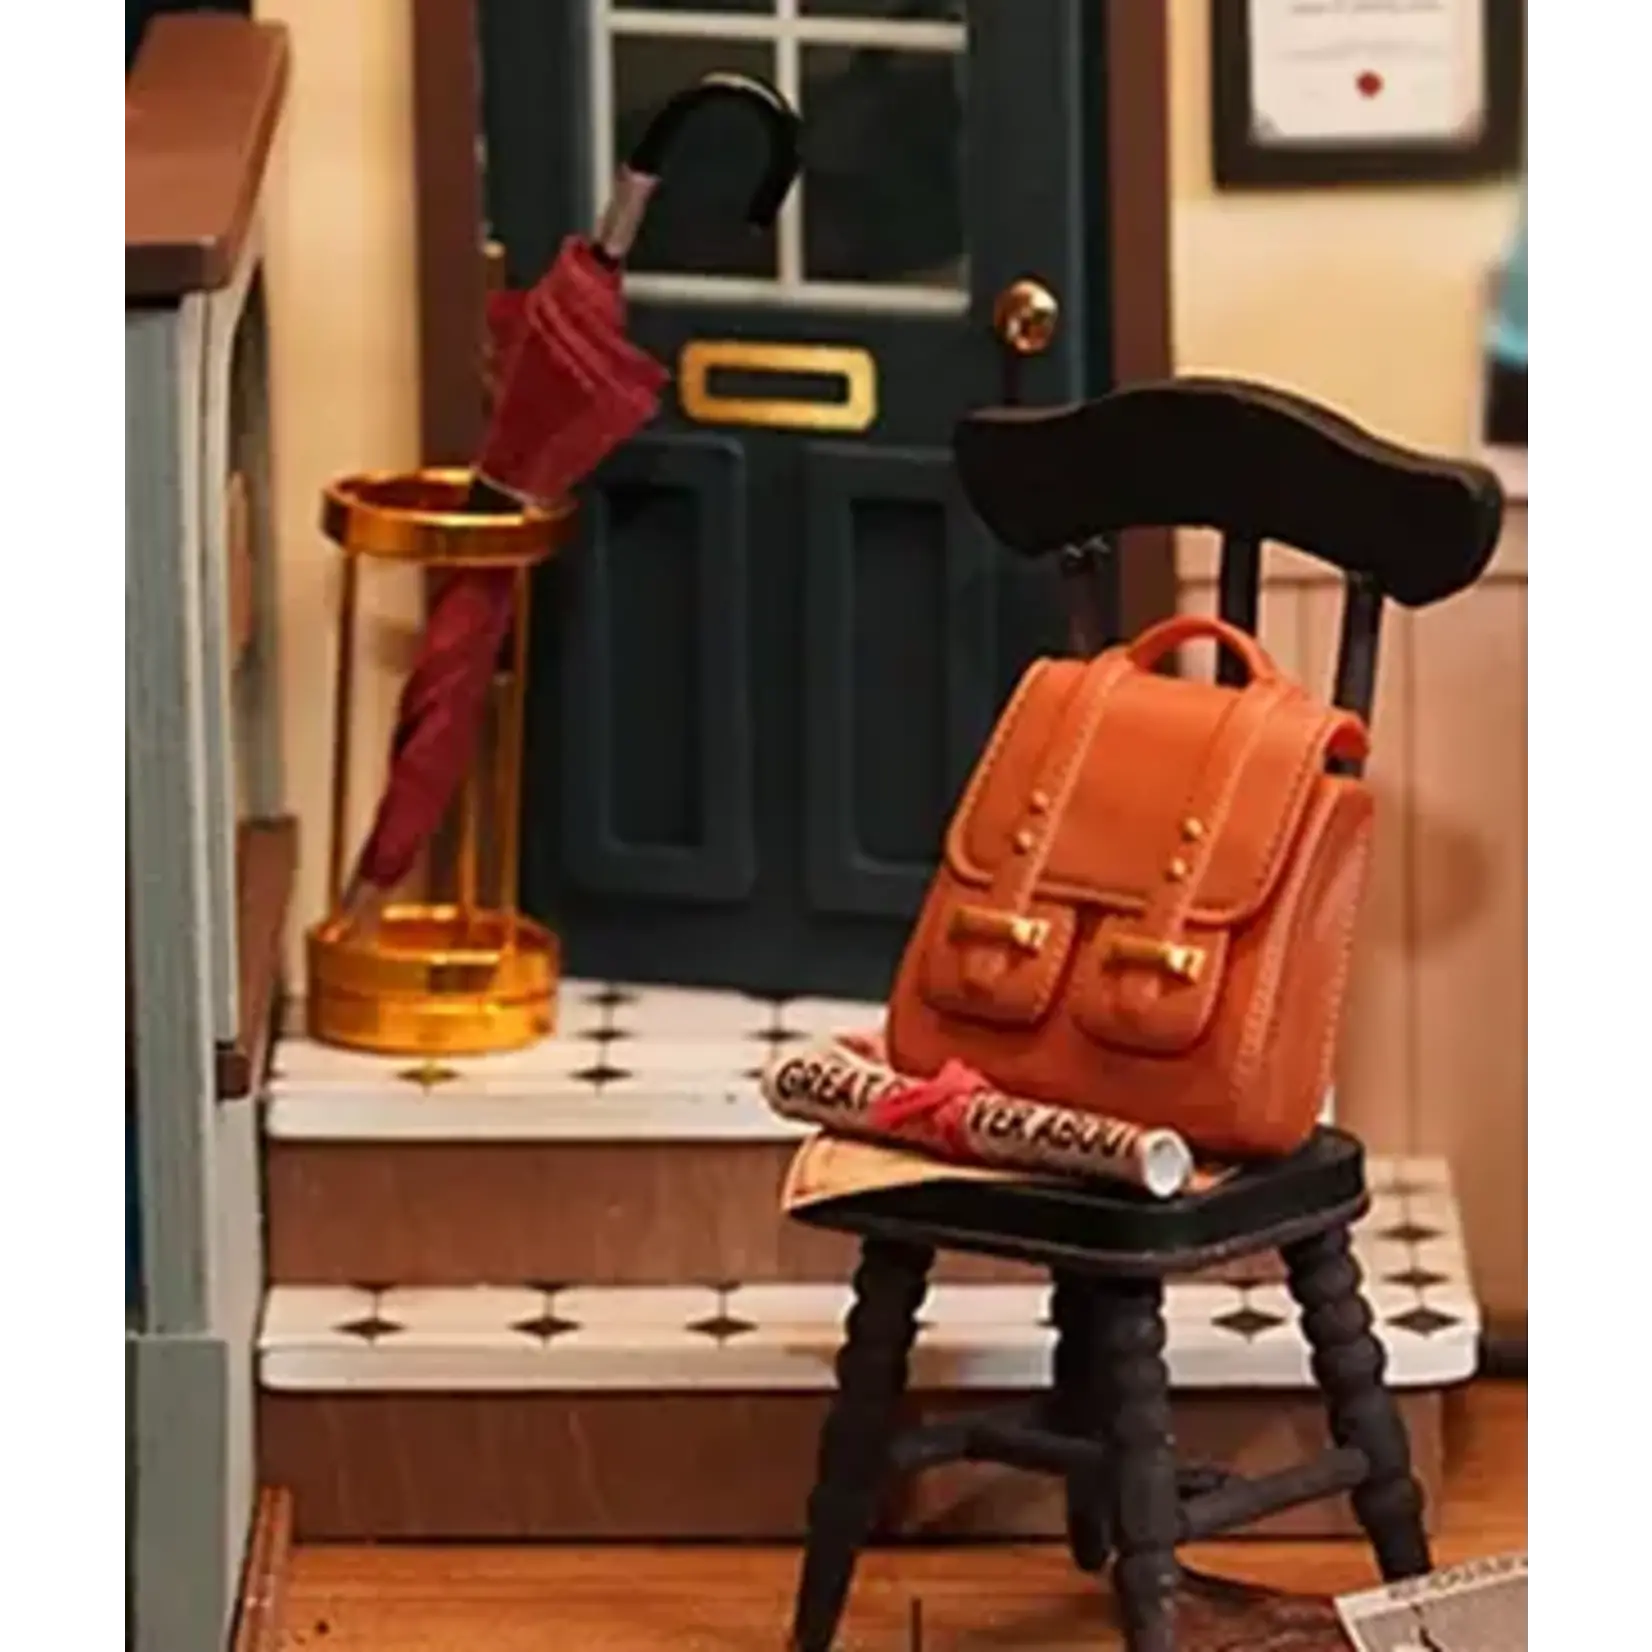 DG156, DIY Miniature House Kit: Alice's Tea Store